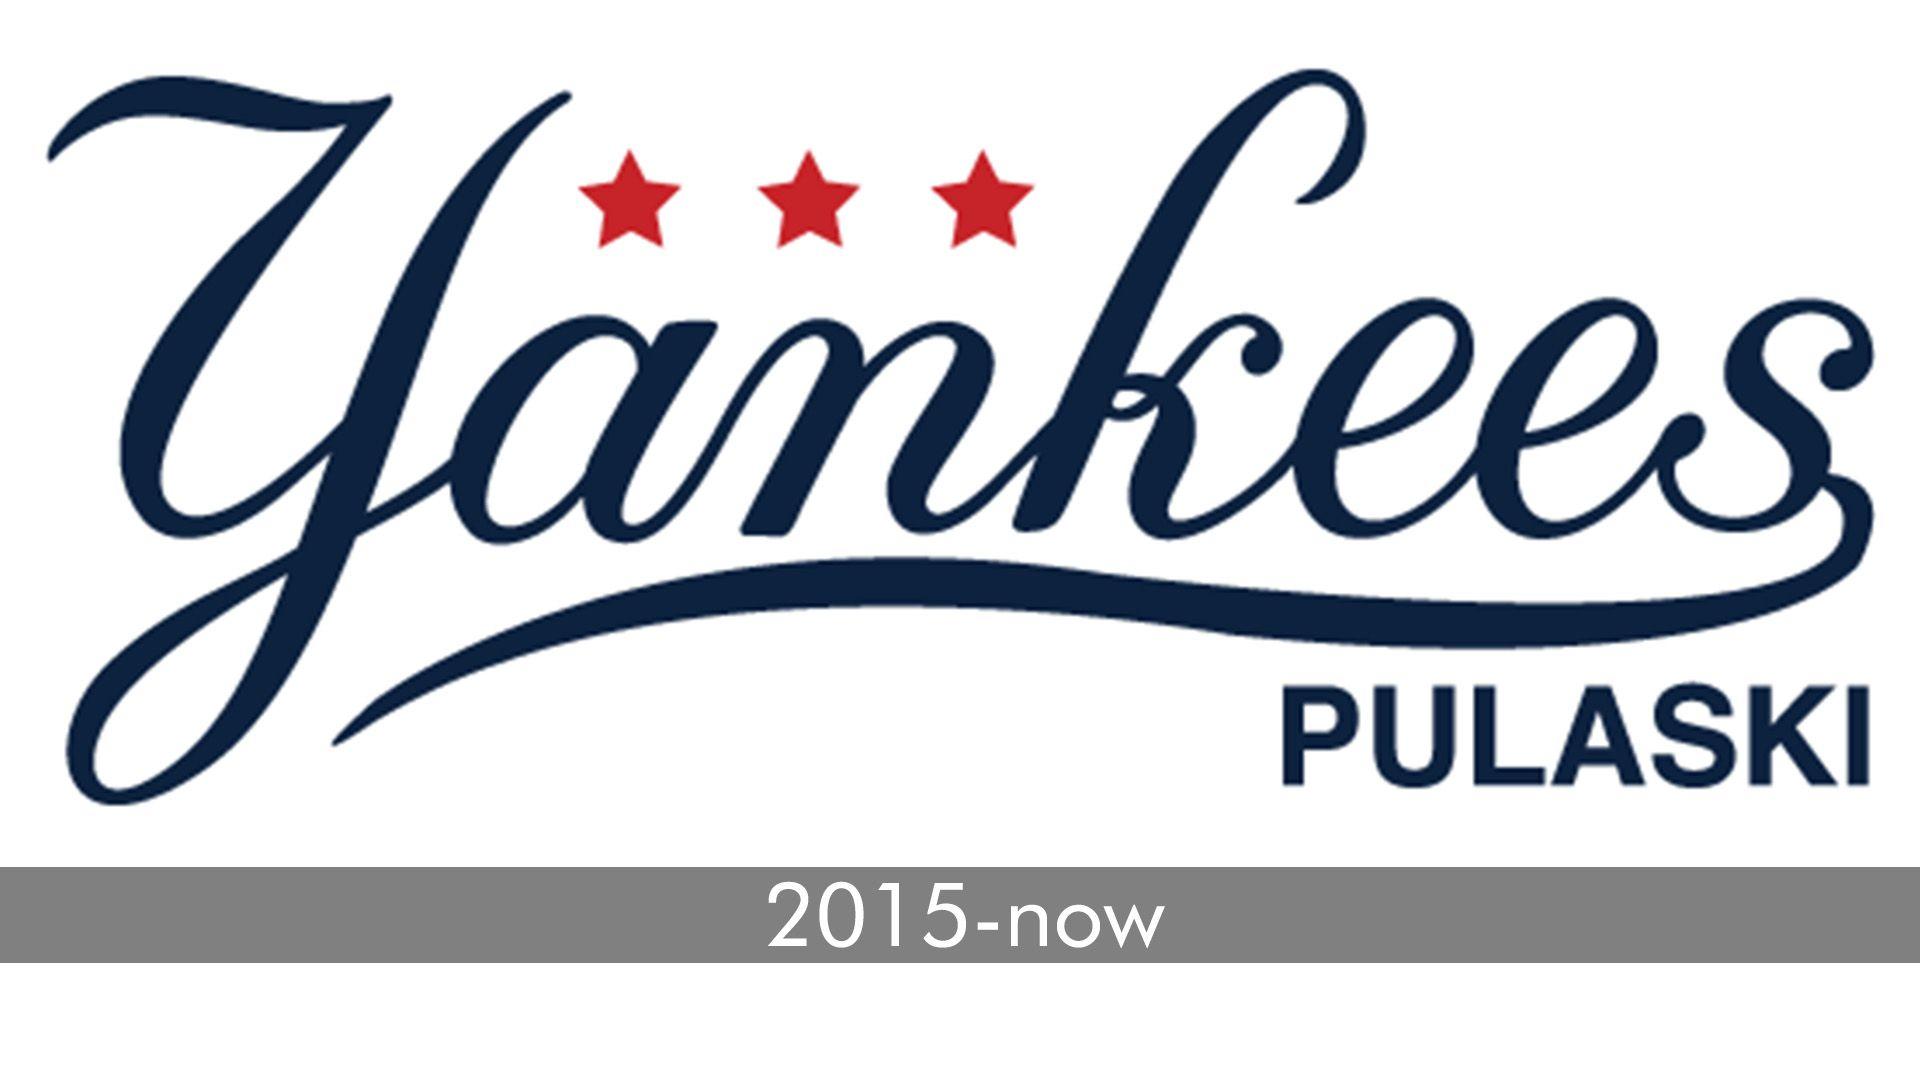 Pulaski Logo - Meaning Pulaski Yankees logo and symbol | history and evolution